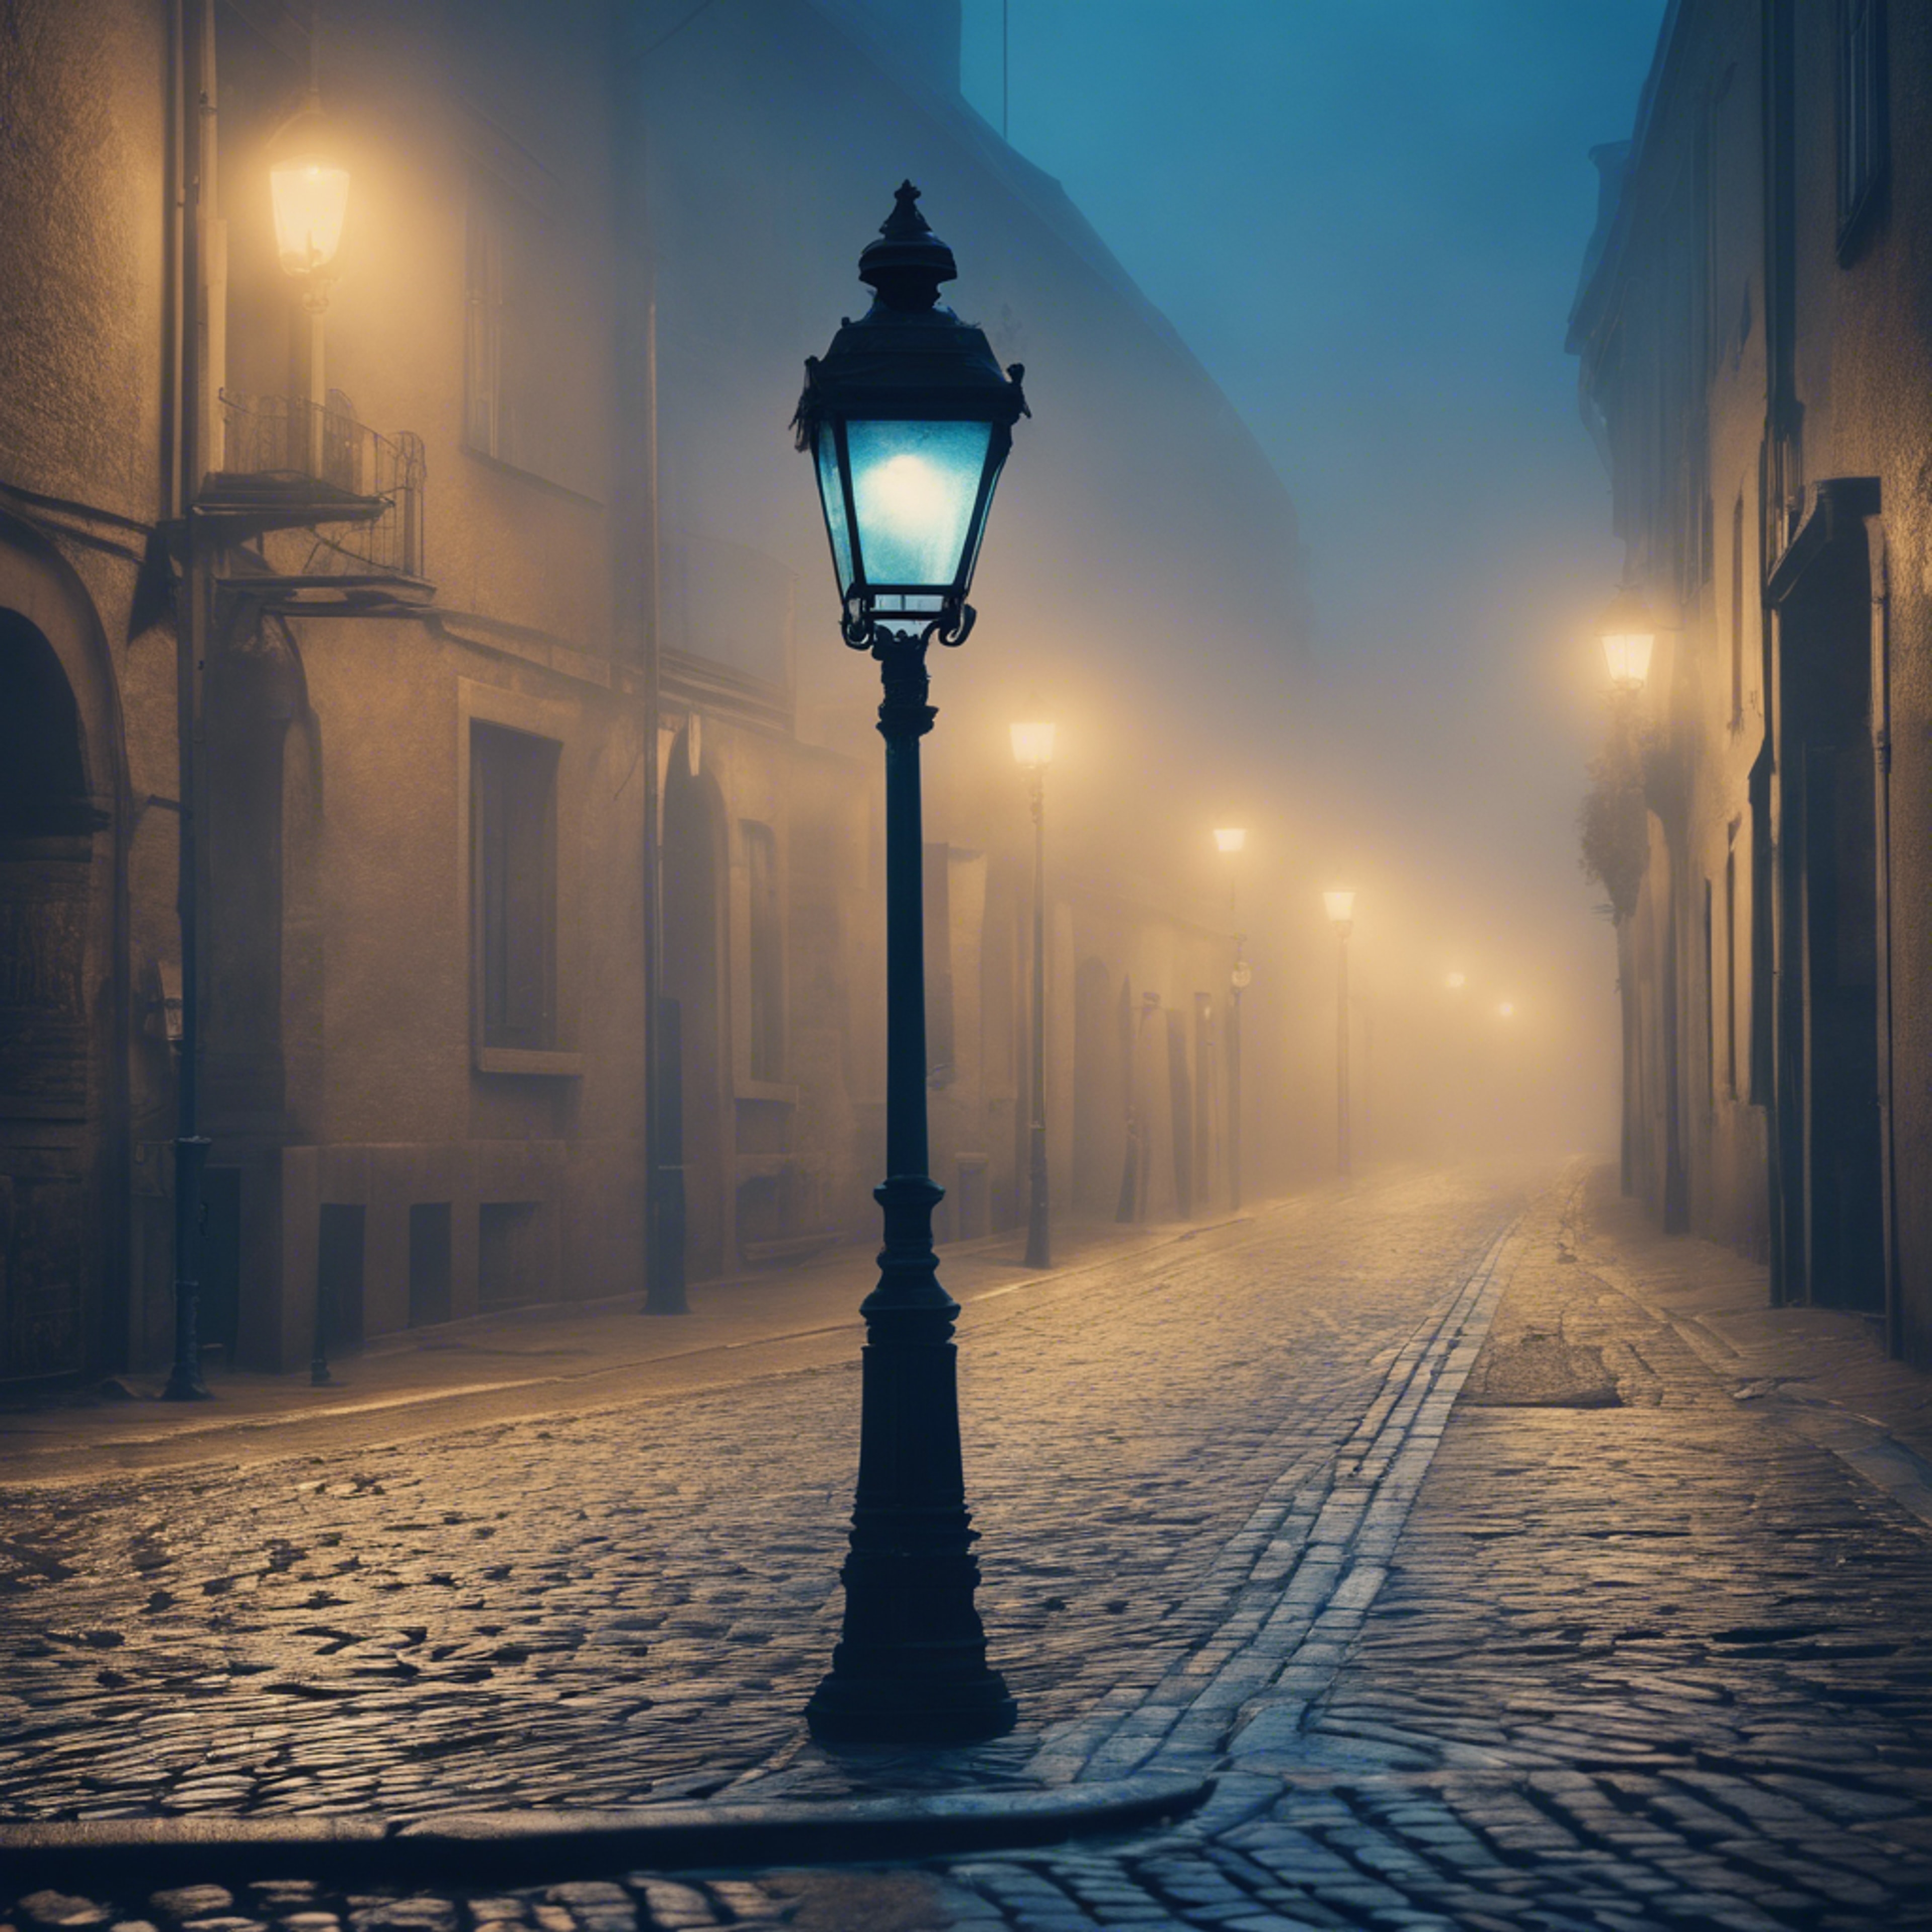 A foggy image of a cobblestone street lit by an old blue lamp post. Hình nền[86a8420f9b4d45a484bd]